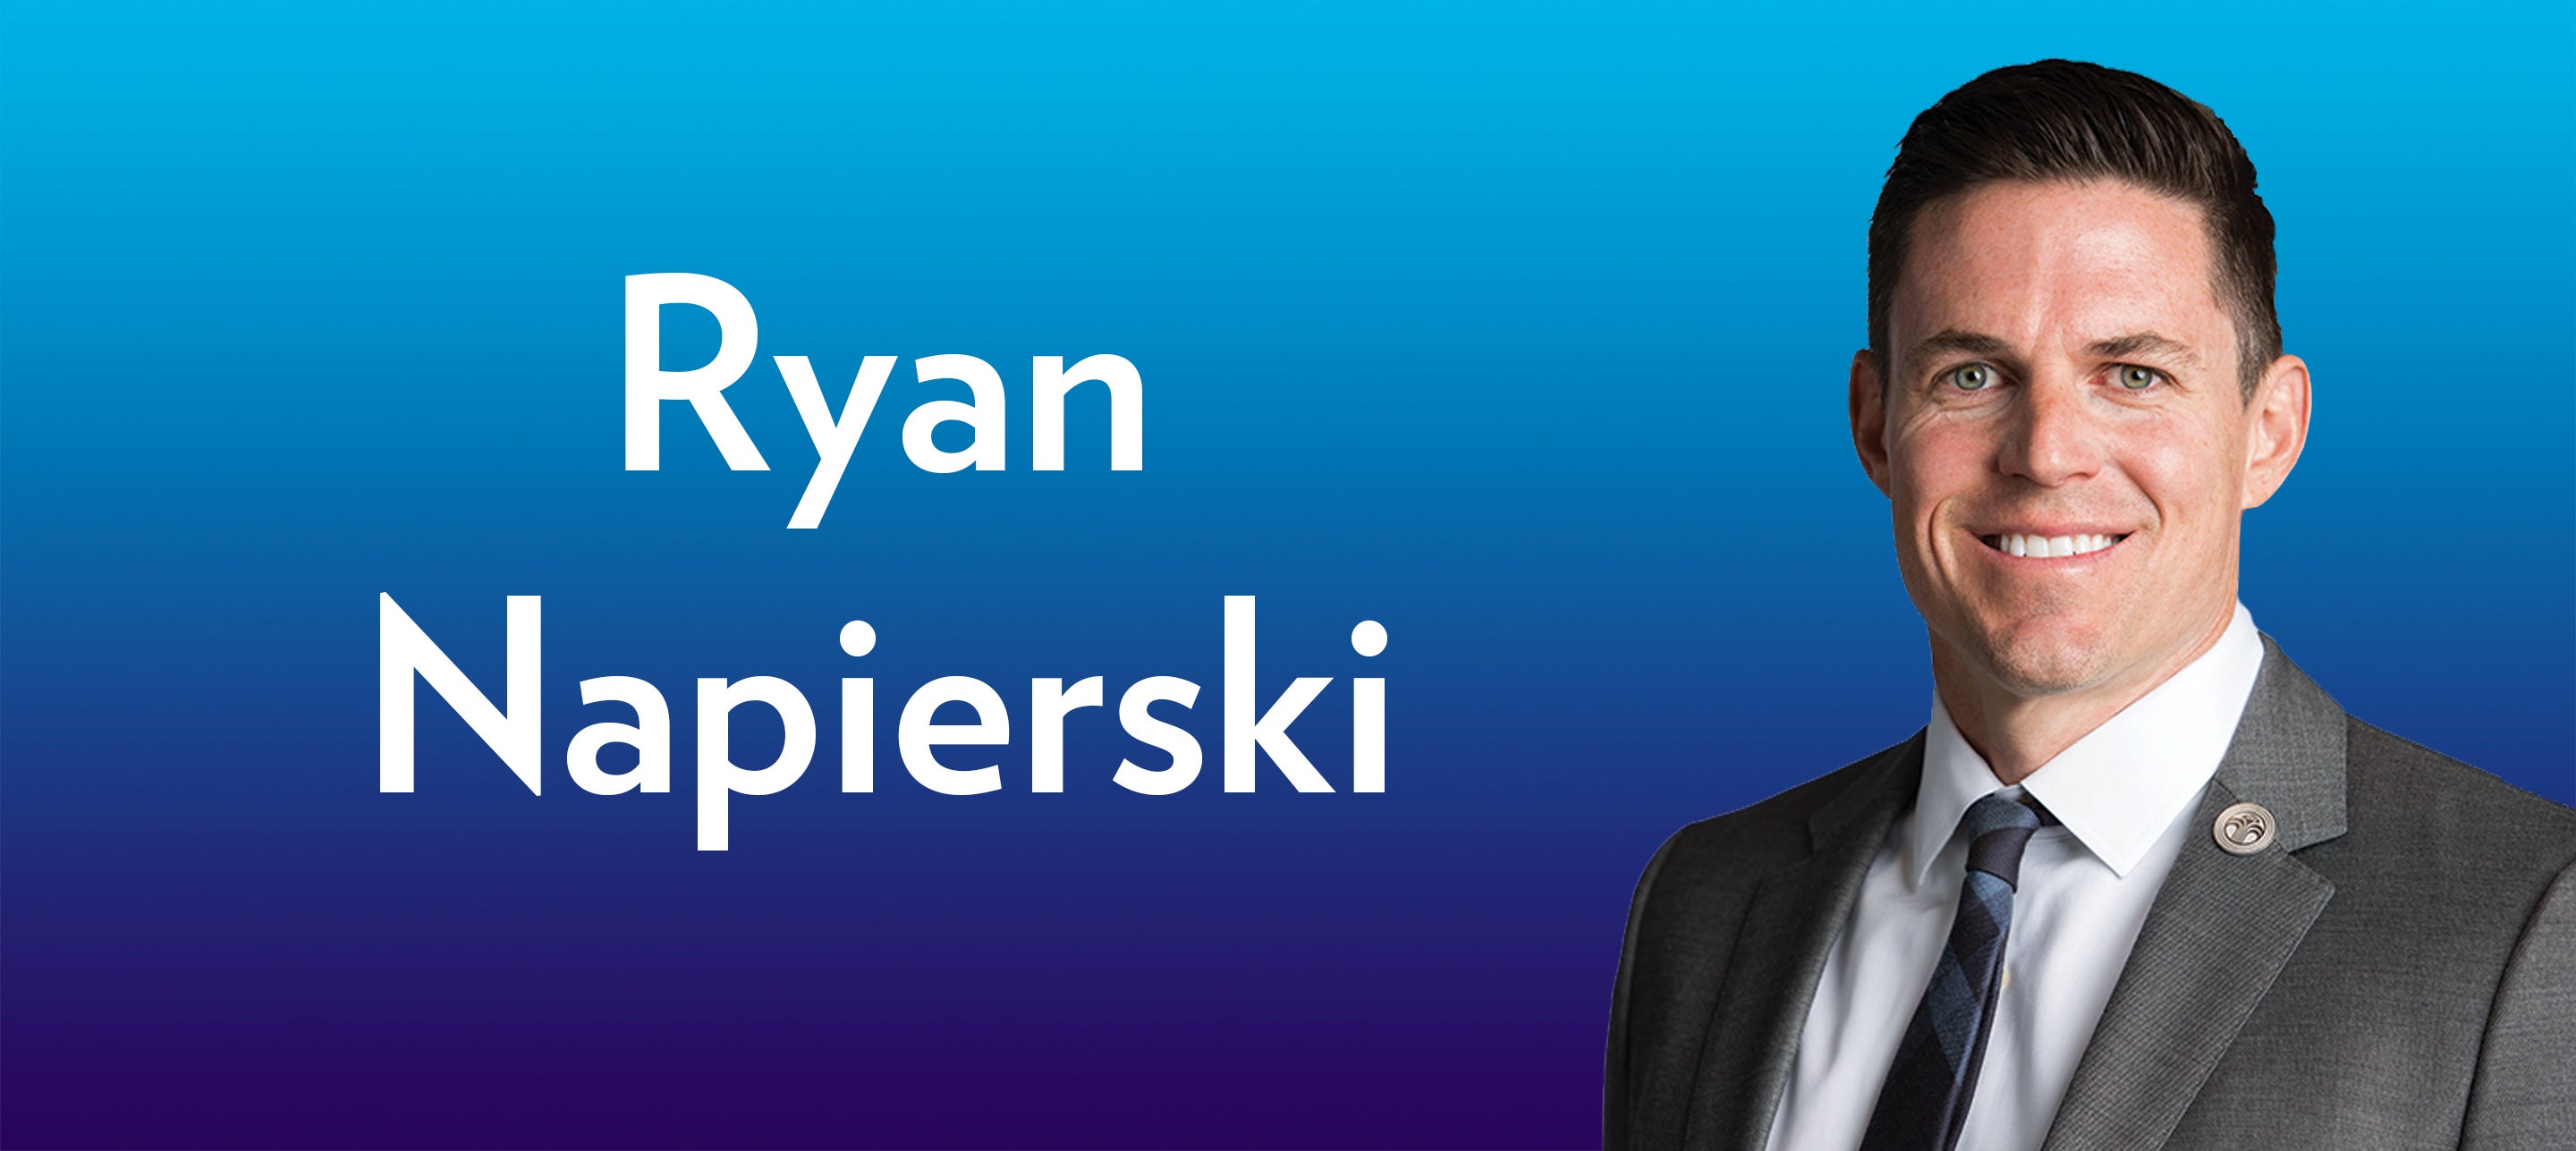 Ryan Napierski Nu Skin's new President